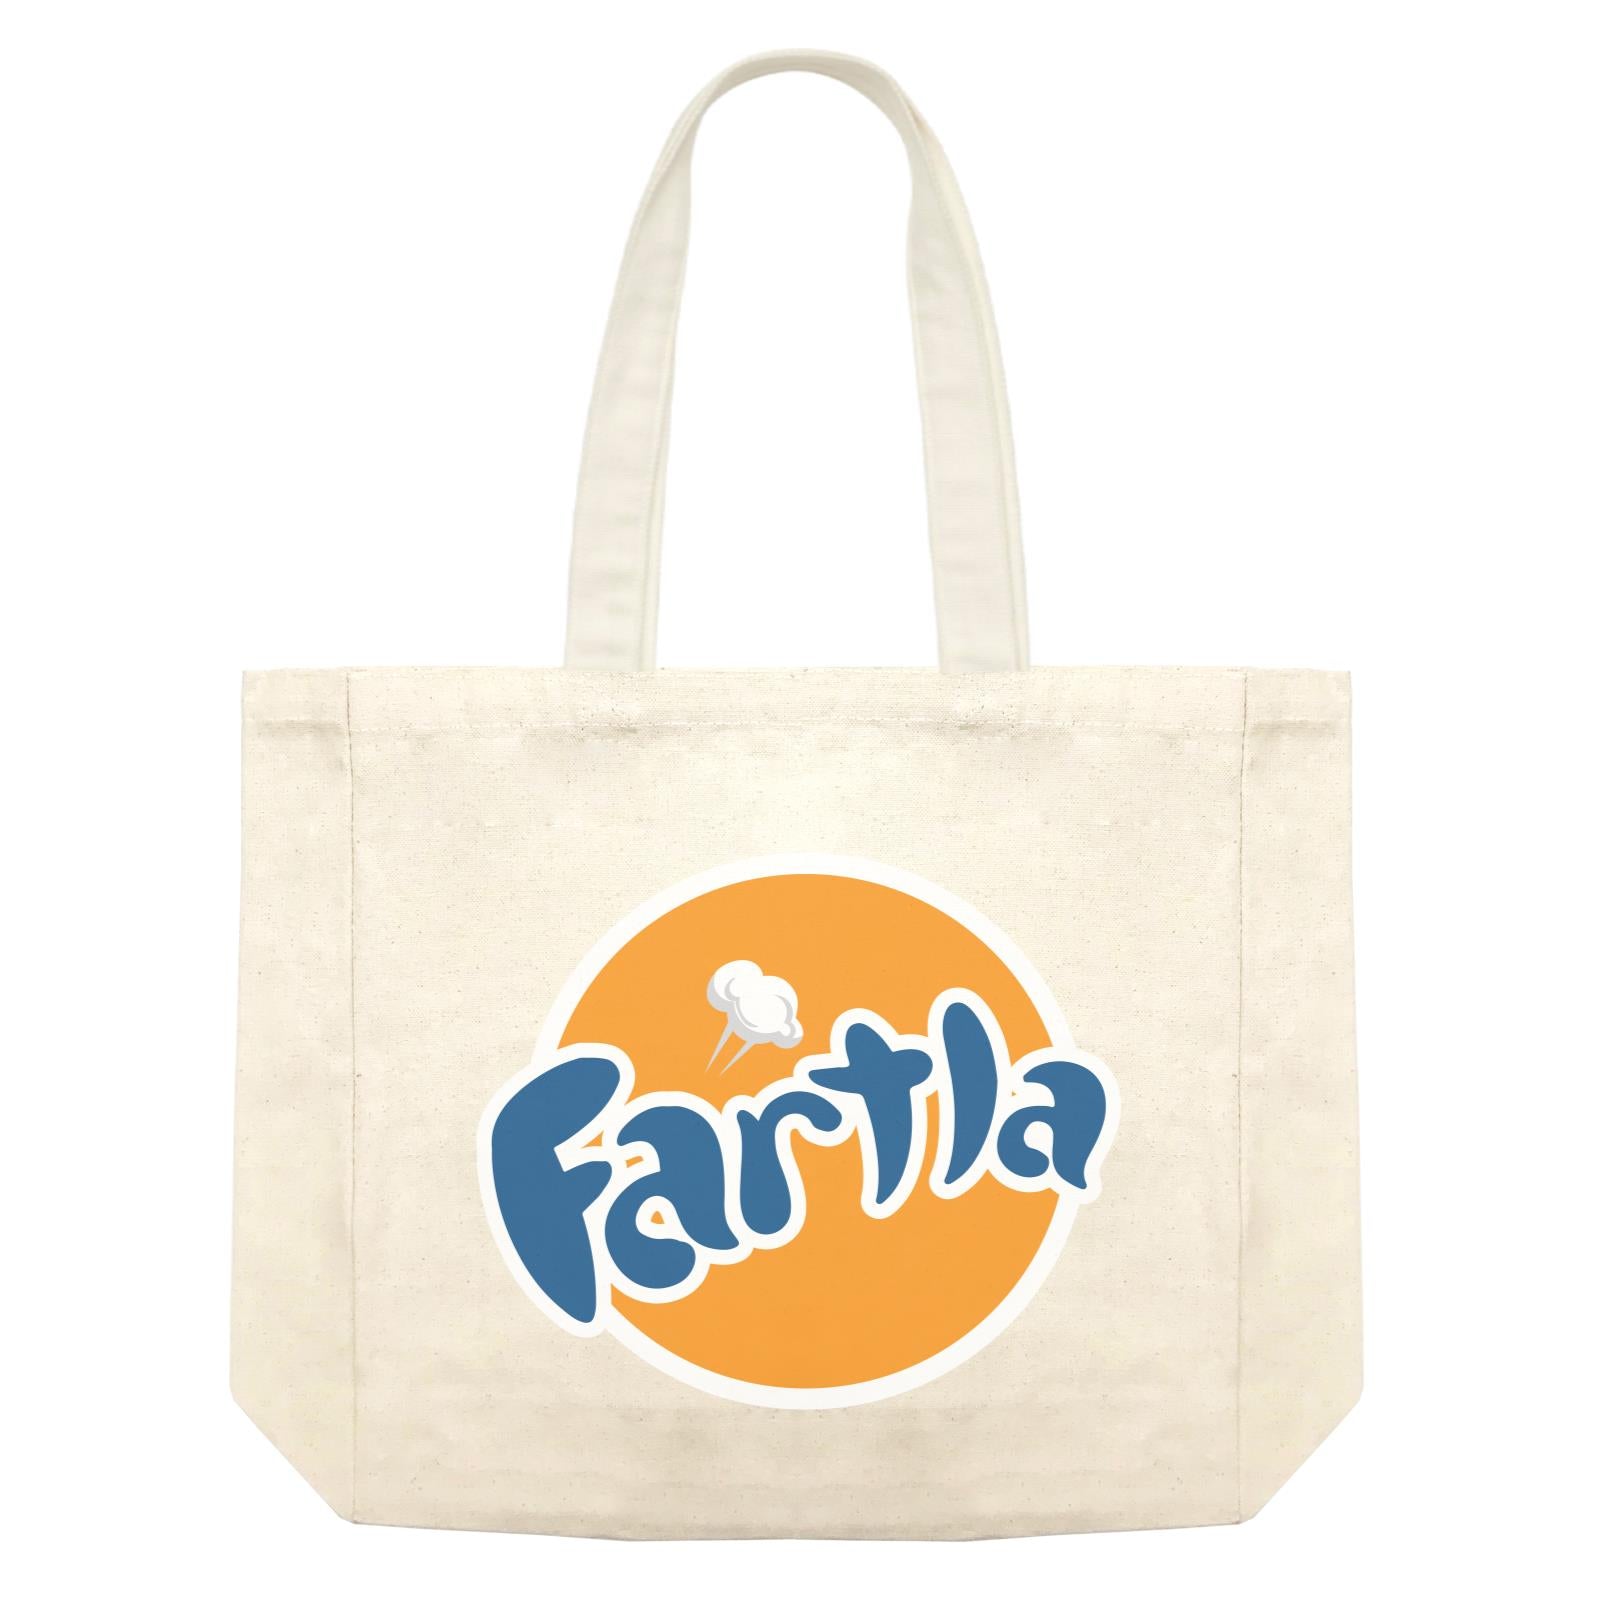 Slang Statement Fartla Accessories Shopping Bag